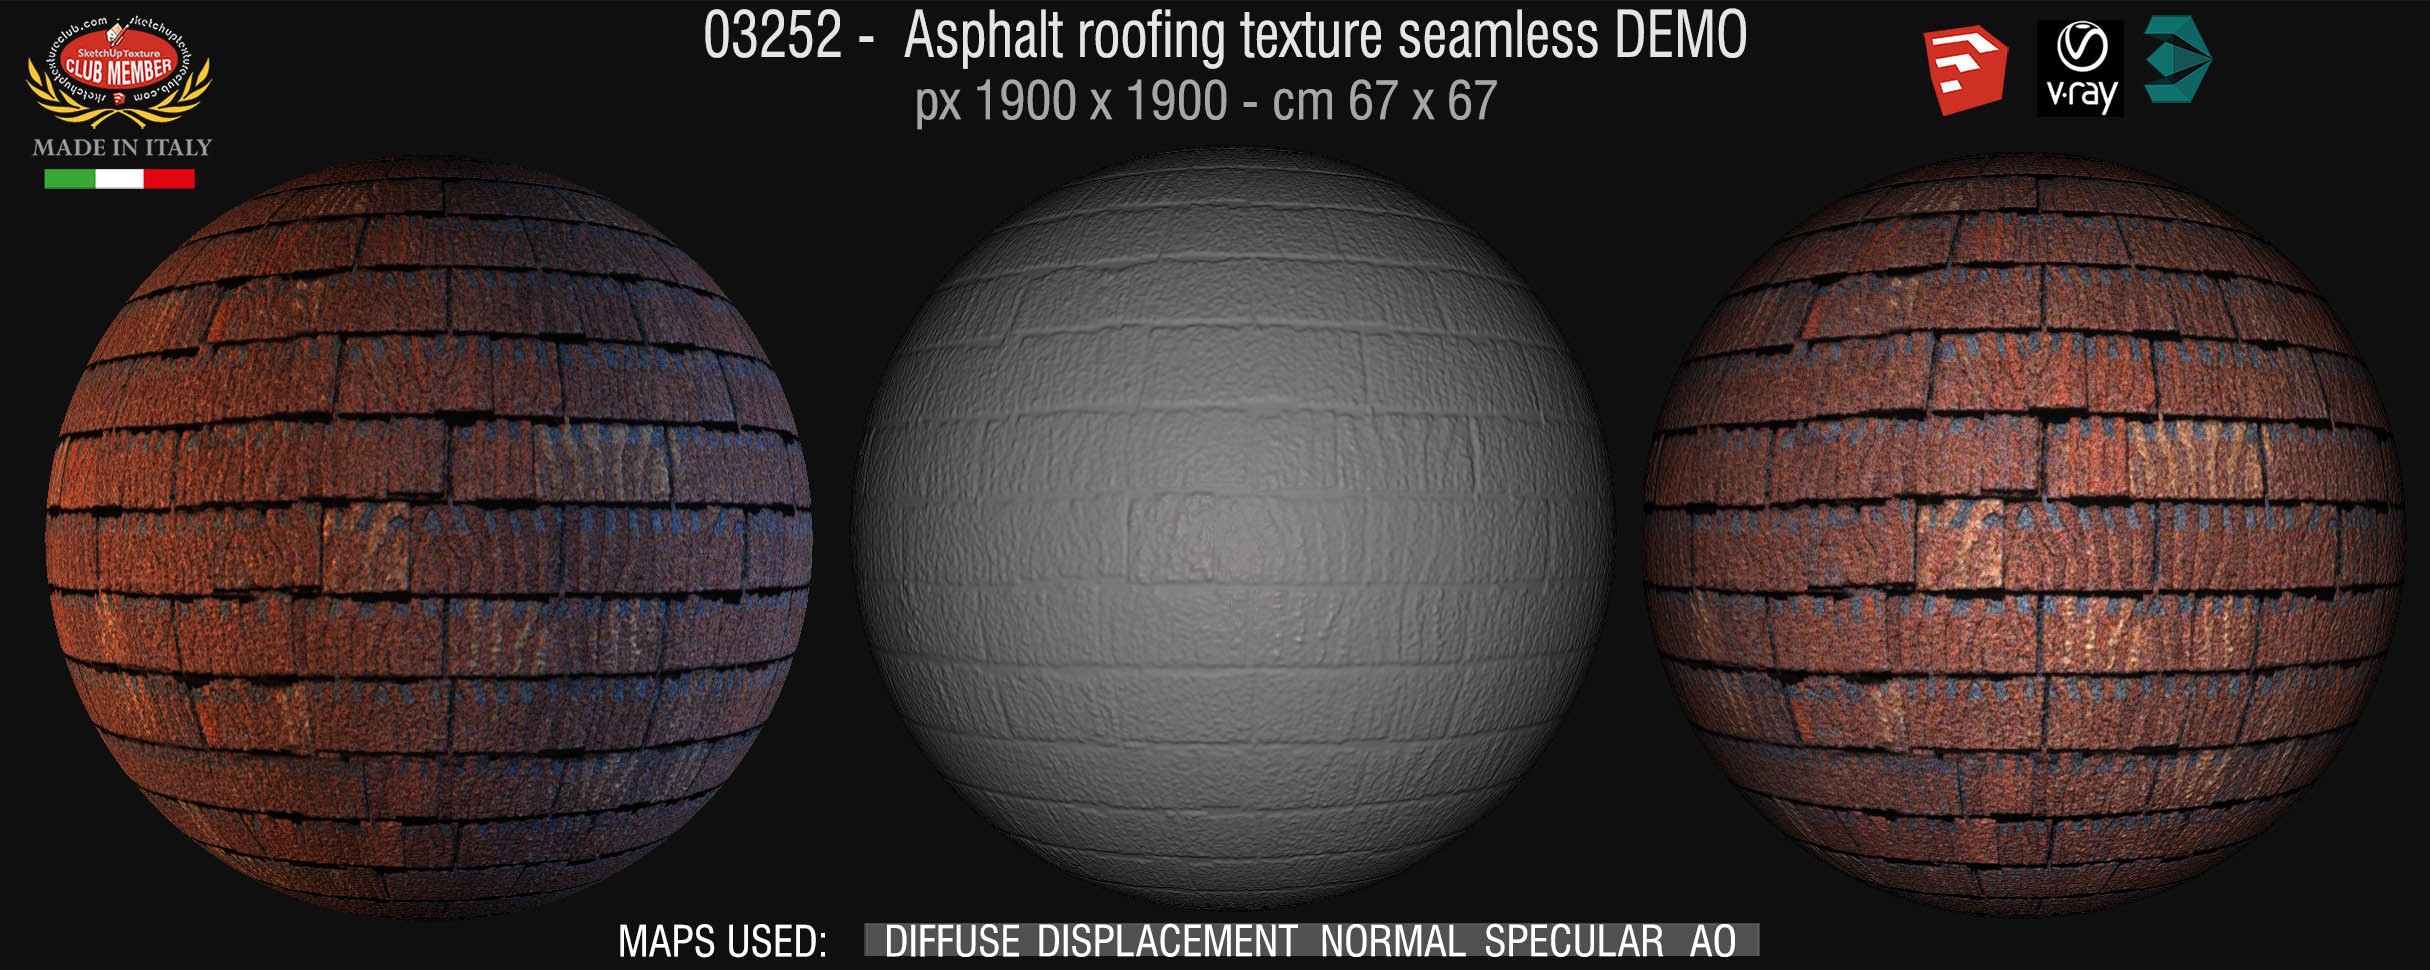 03252 Asphalt roofing texture + maps DEMO